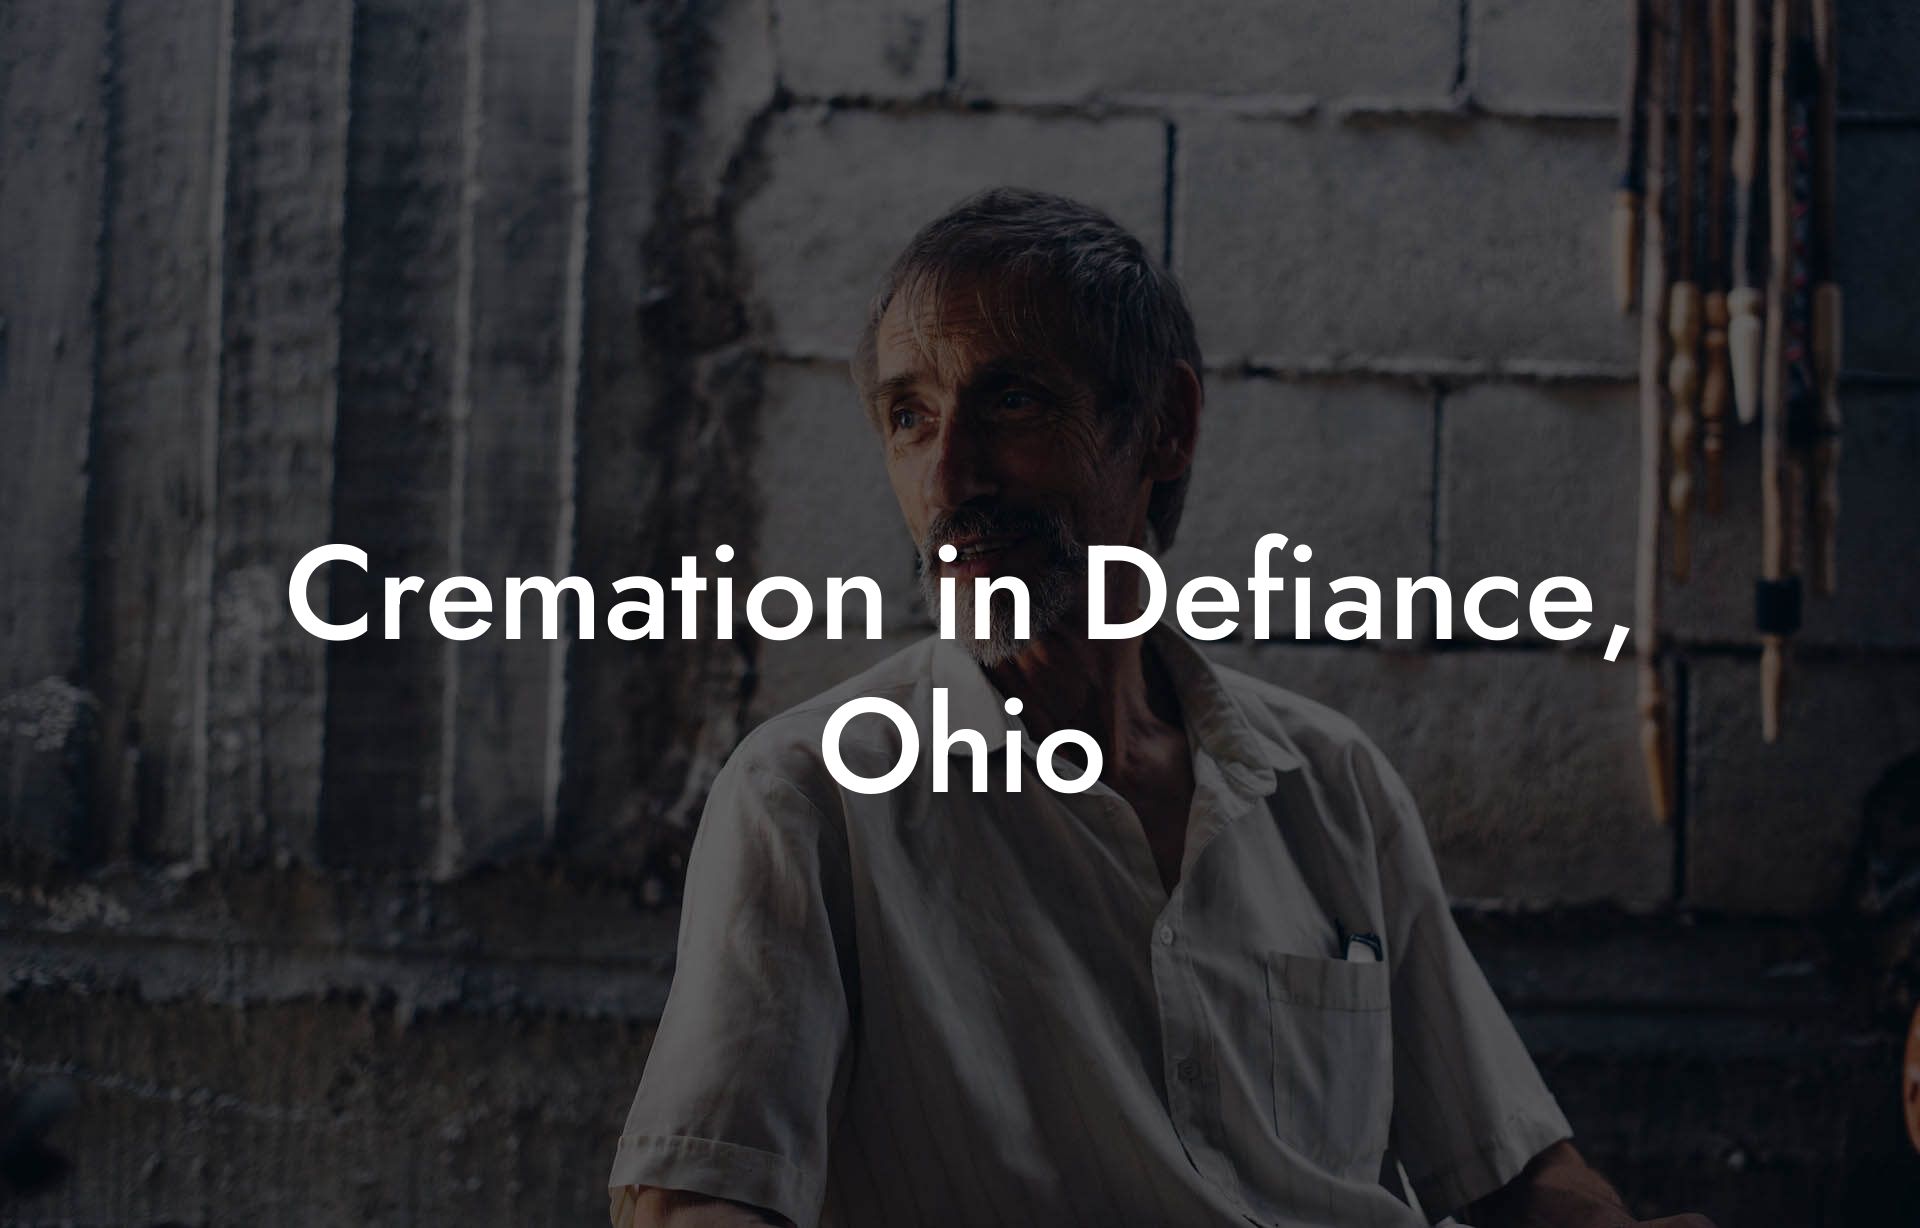 Cremation in Defiance, Ohio